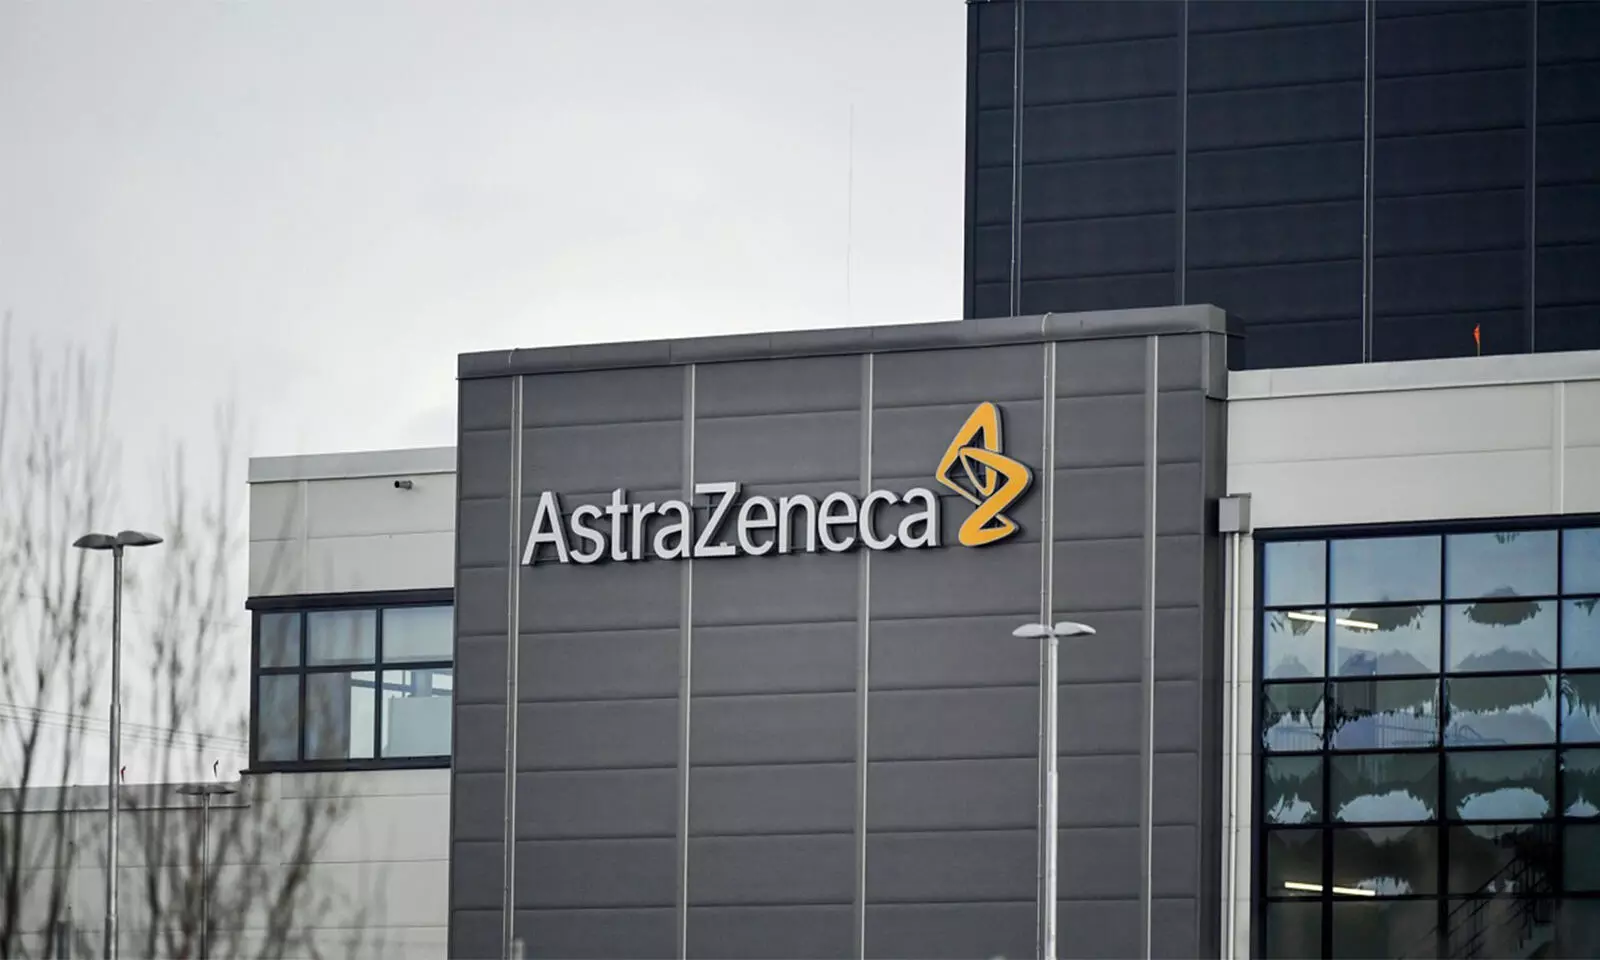 AstraZeneca, Daiichi Sankyo get USFDA nod for Enhertu for earlier breast cancer use